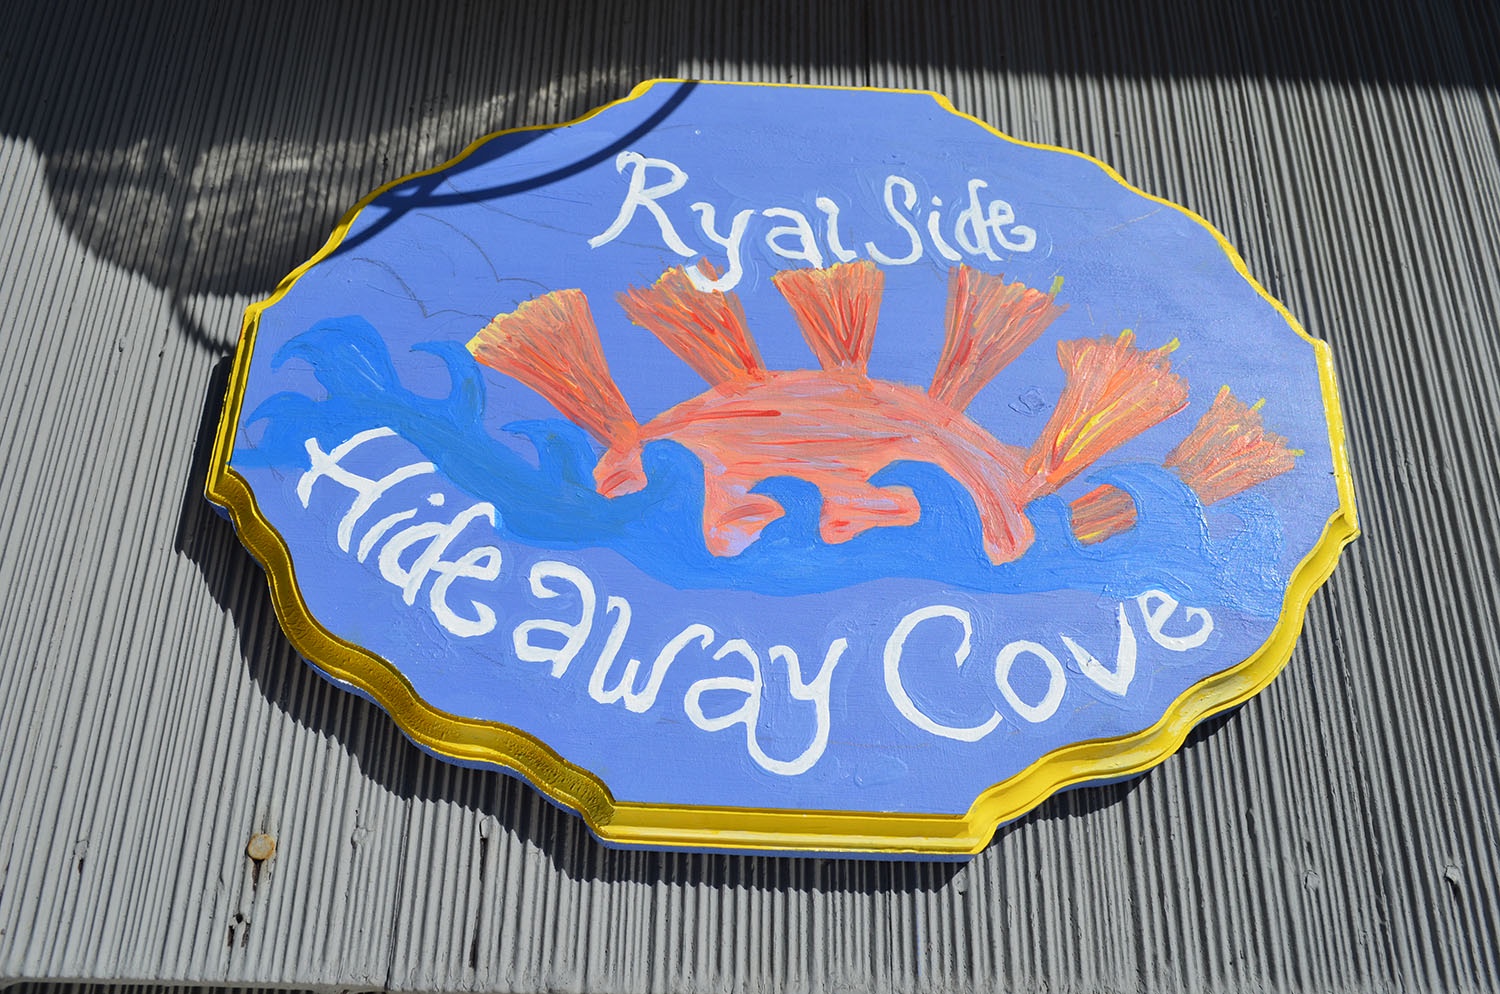 Welcome to Ryal Side Hideaway Cove!